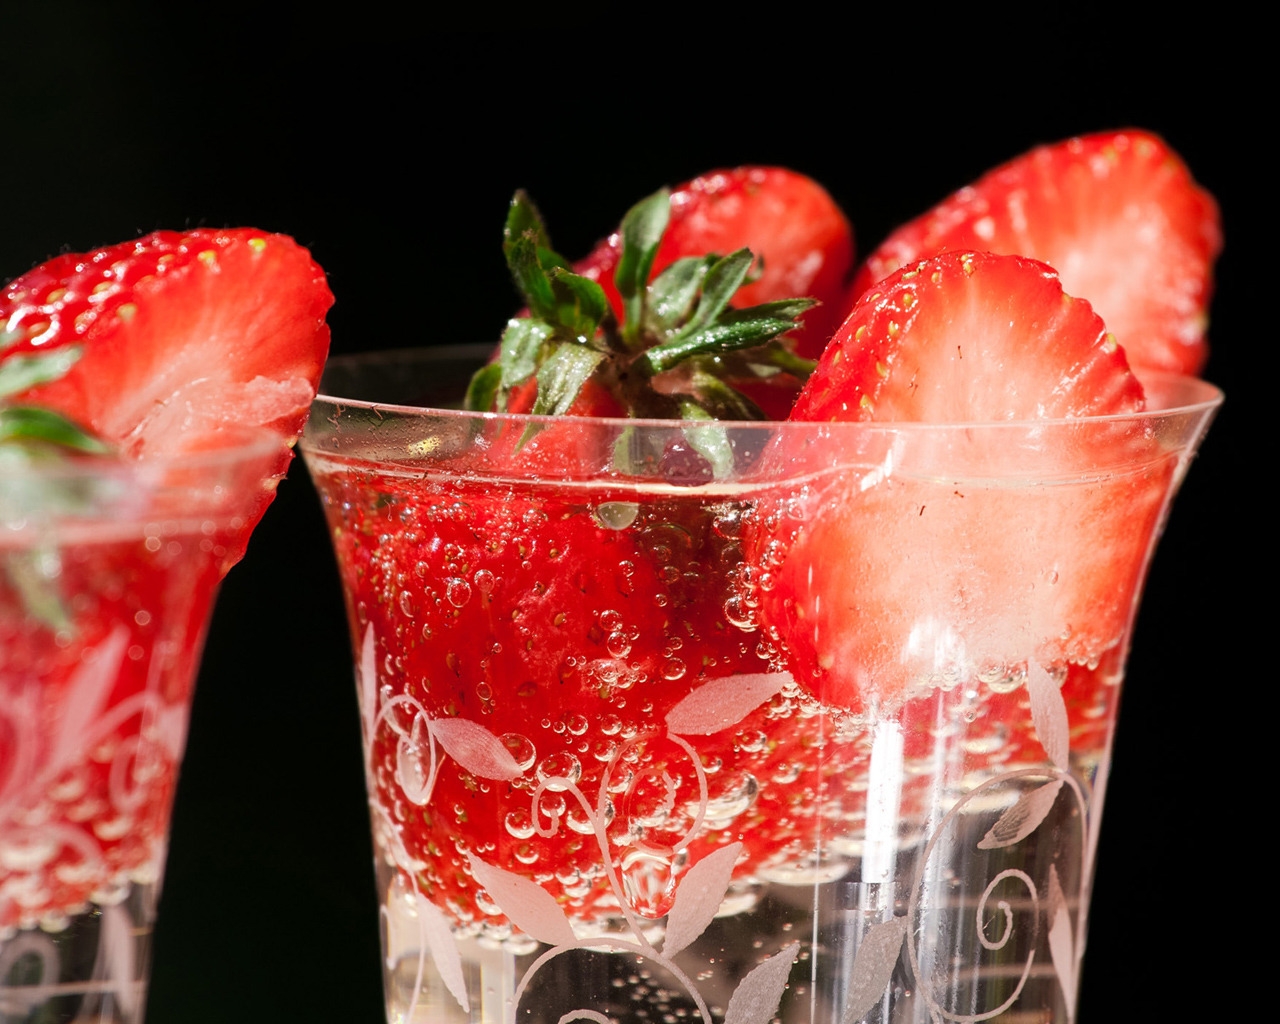 Fresh strawberries in glasses for 1280 x 1024 resolution